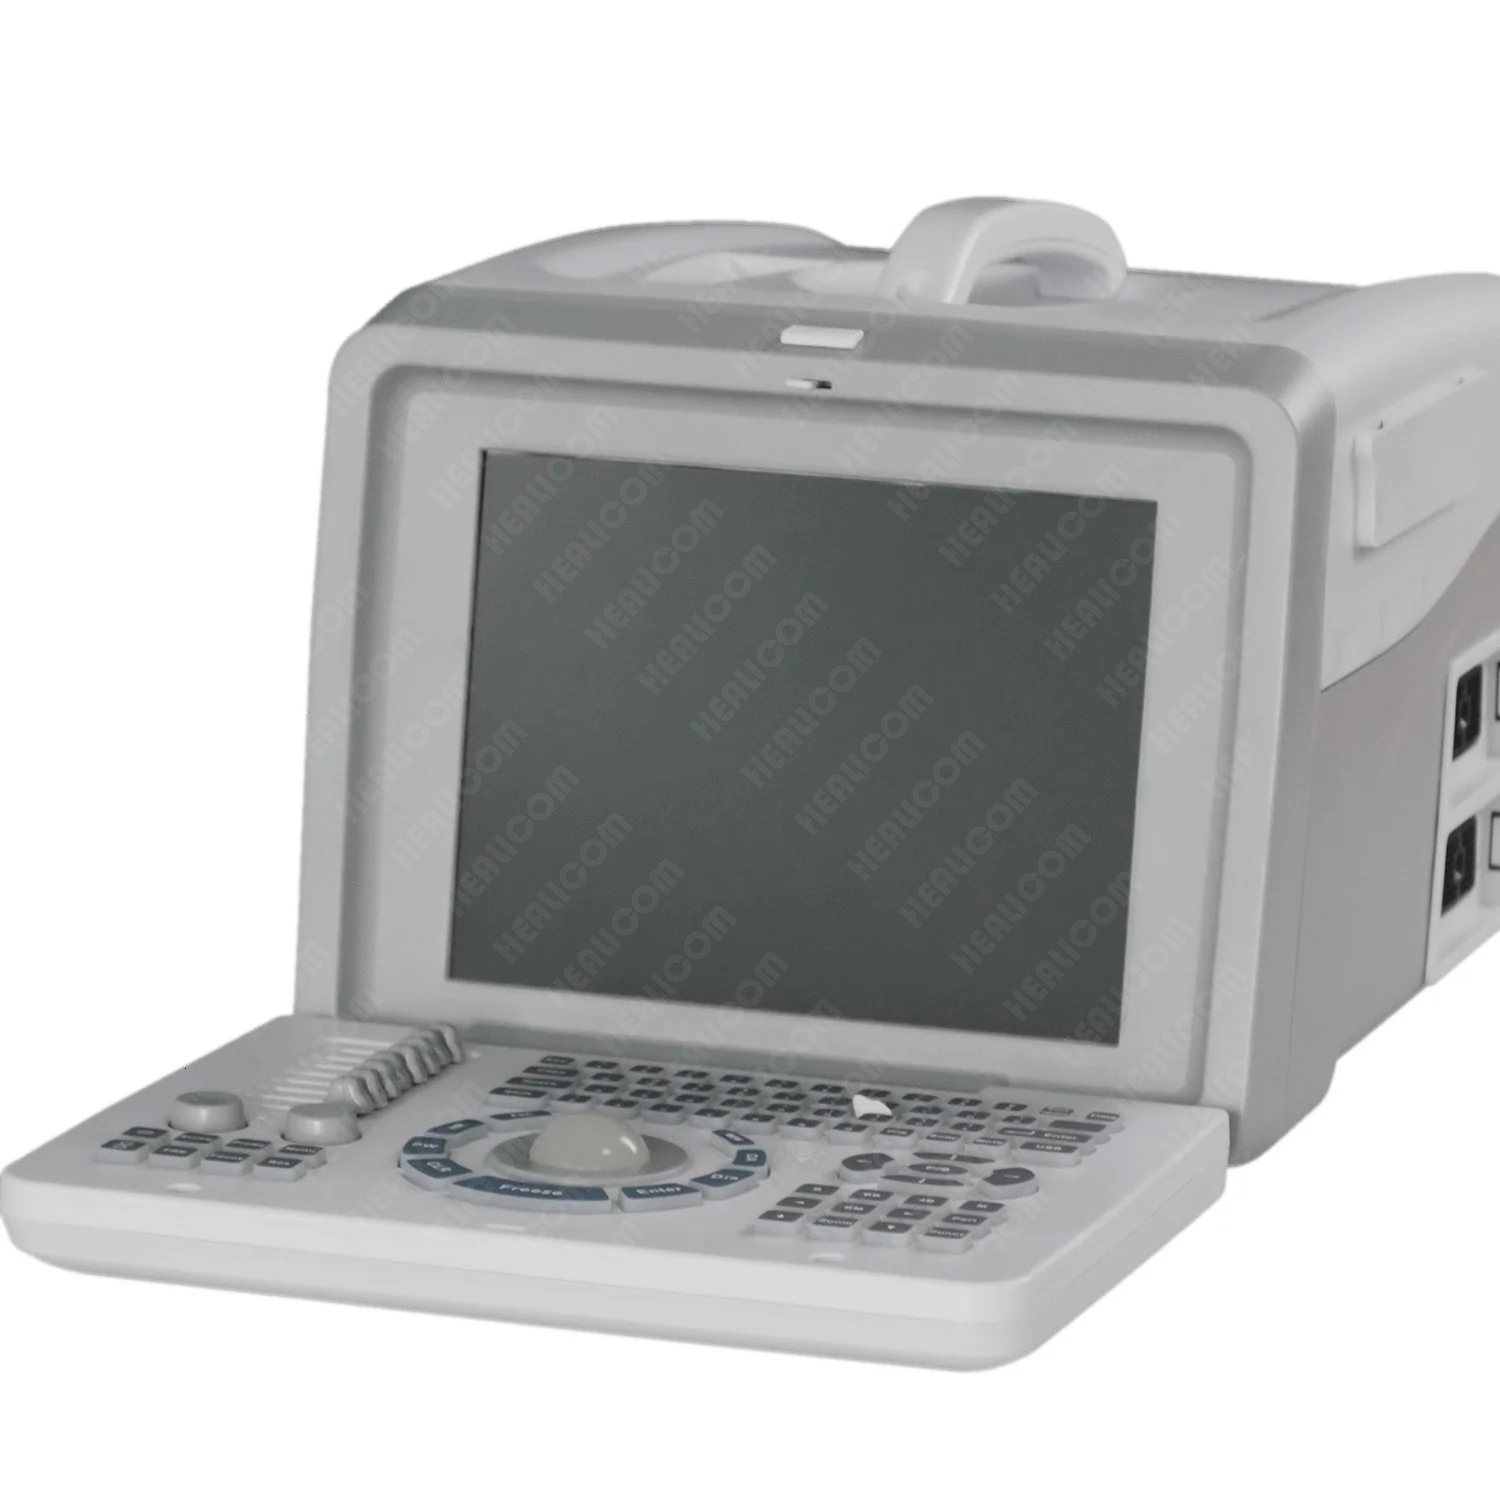 HBW-2 Full Digital Portable B/W Ultrasound Scanner